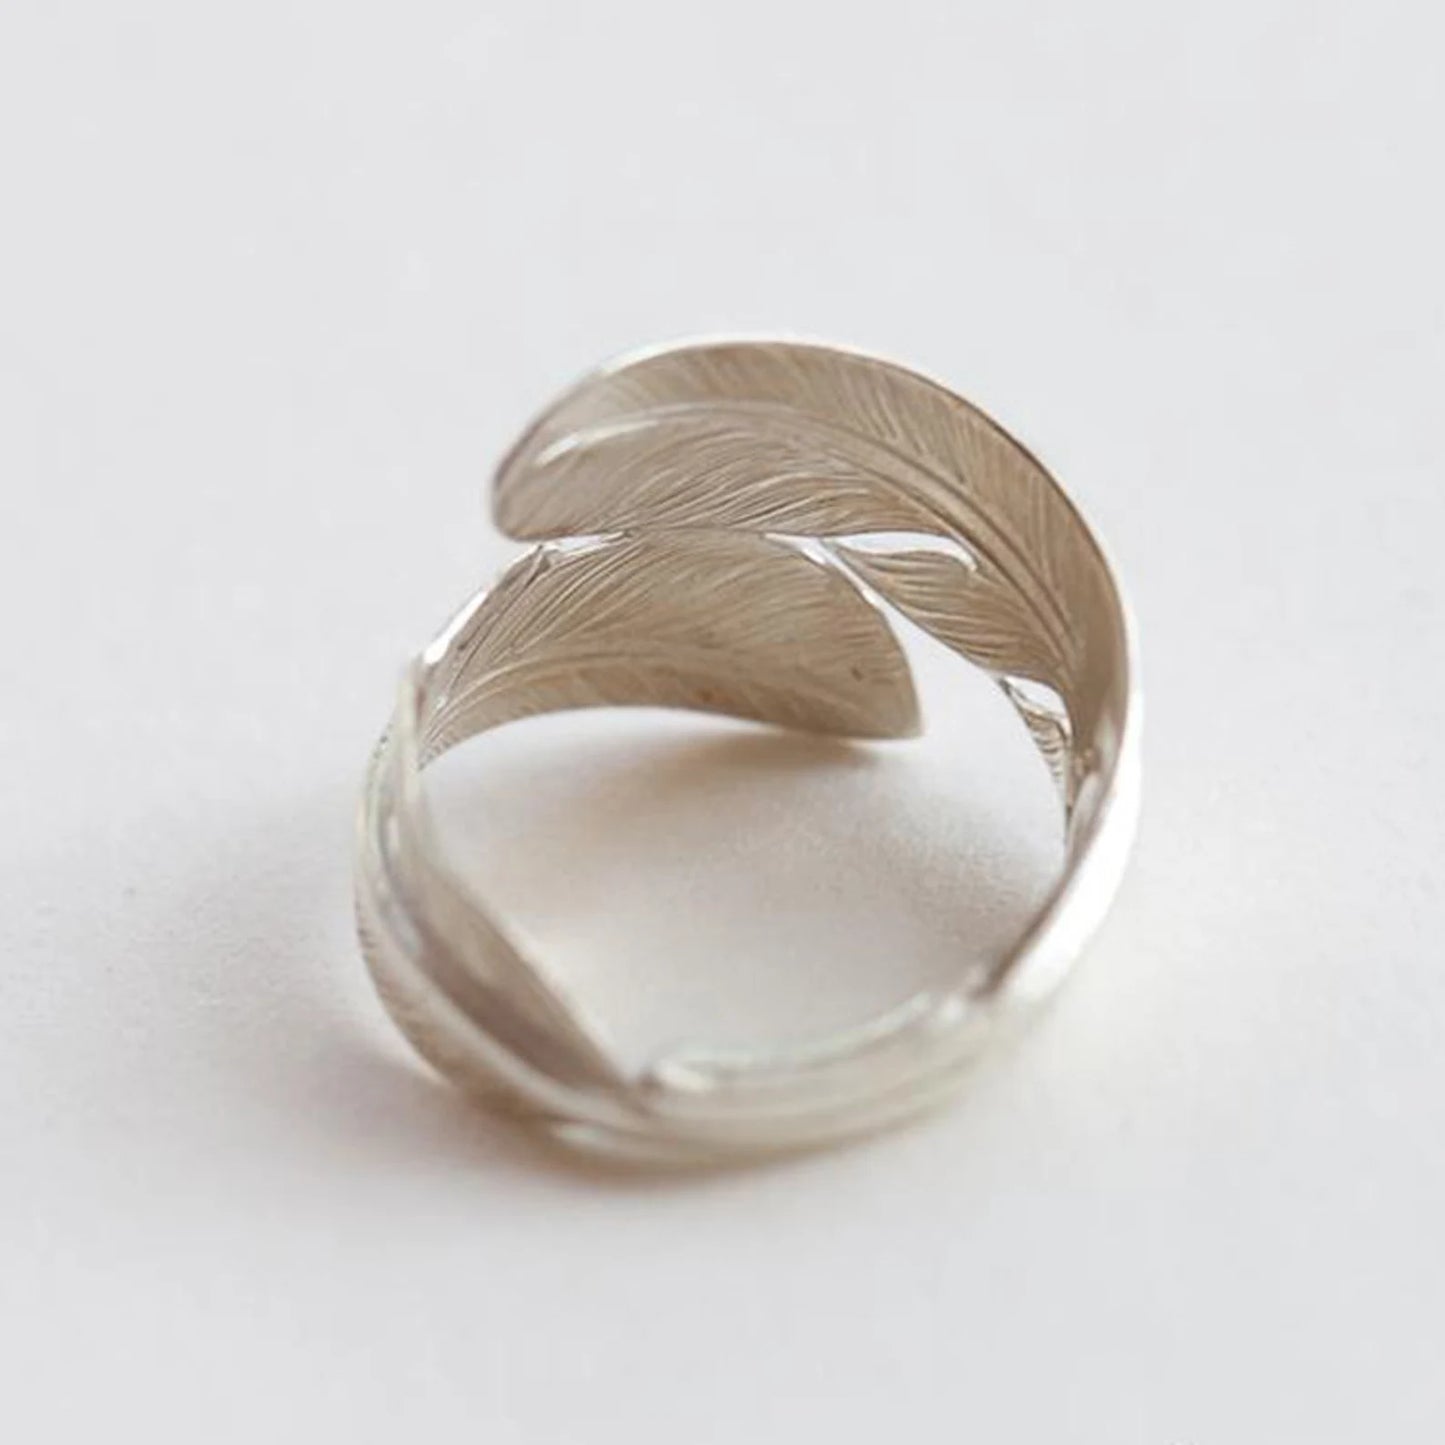 Handmade Adjustable Feather Ring